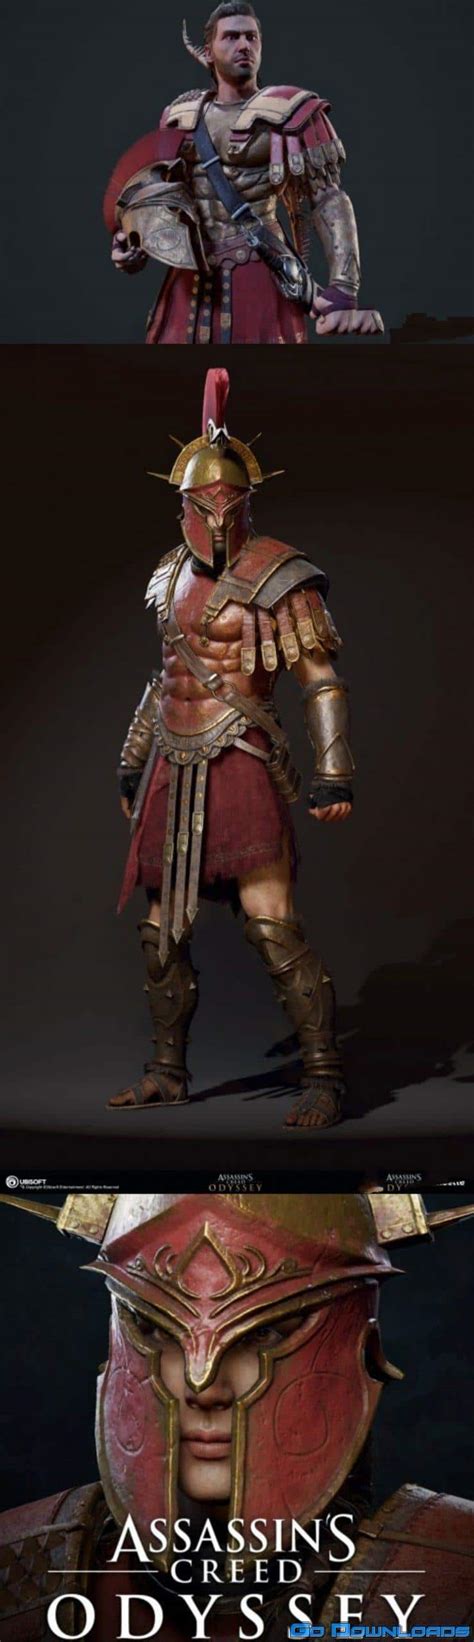 Assassin‘s Creed Odyssey Character Fan Art Spartan War Hero Realtime